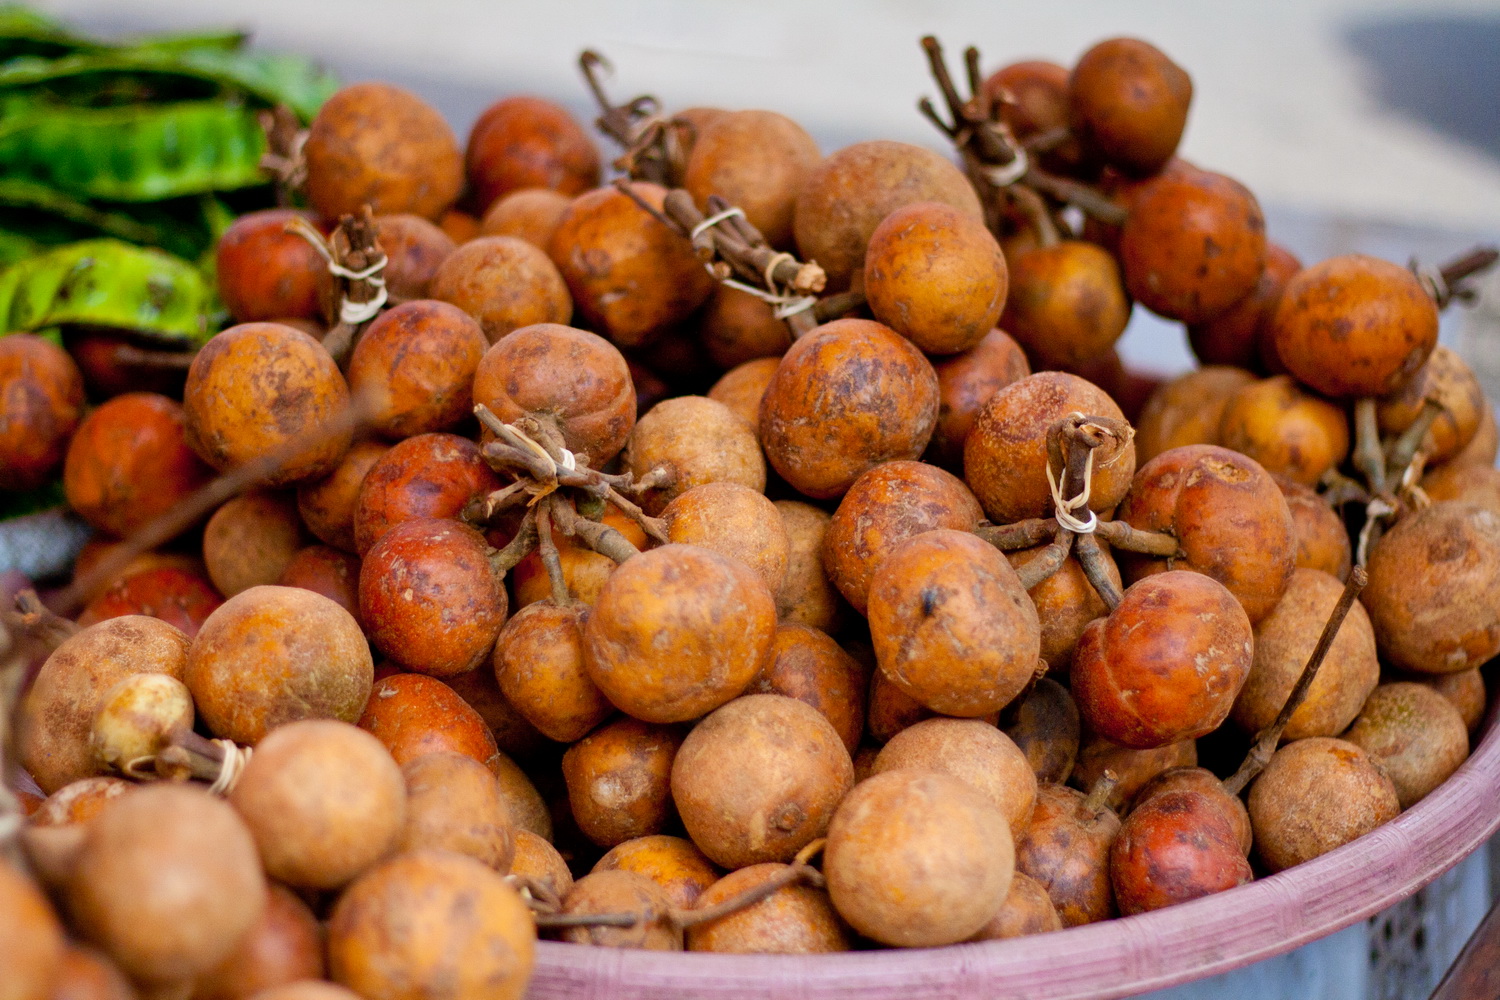  BUAH  TAMPUI buah hutan  khas riau Jendri Uno